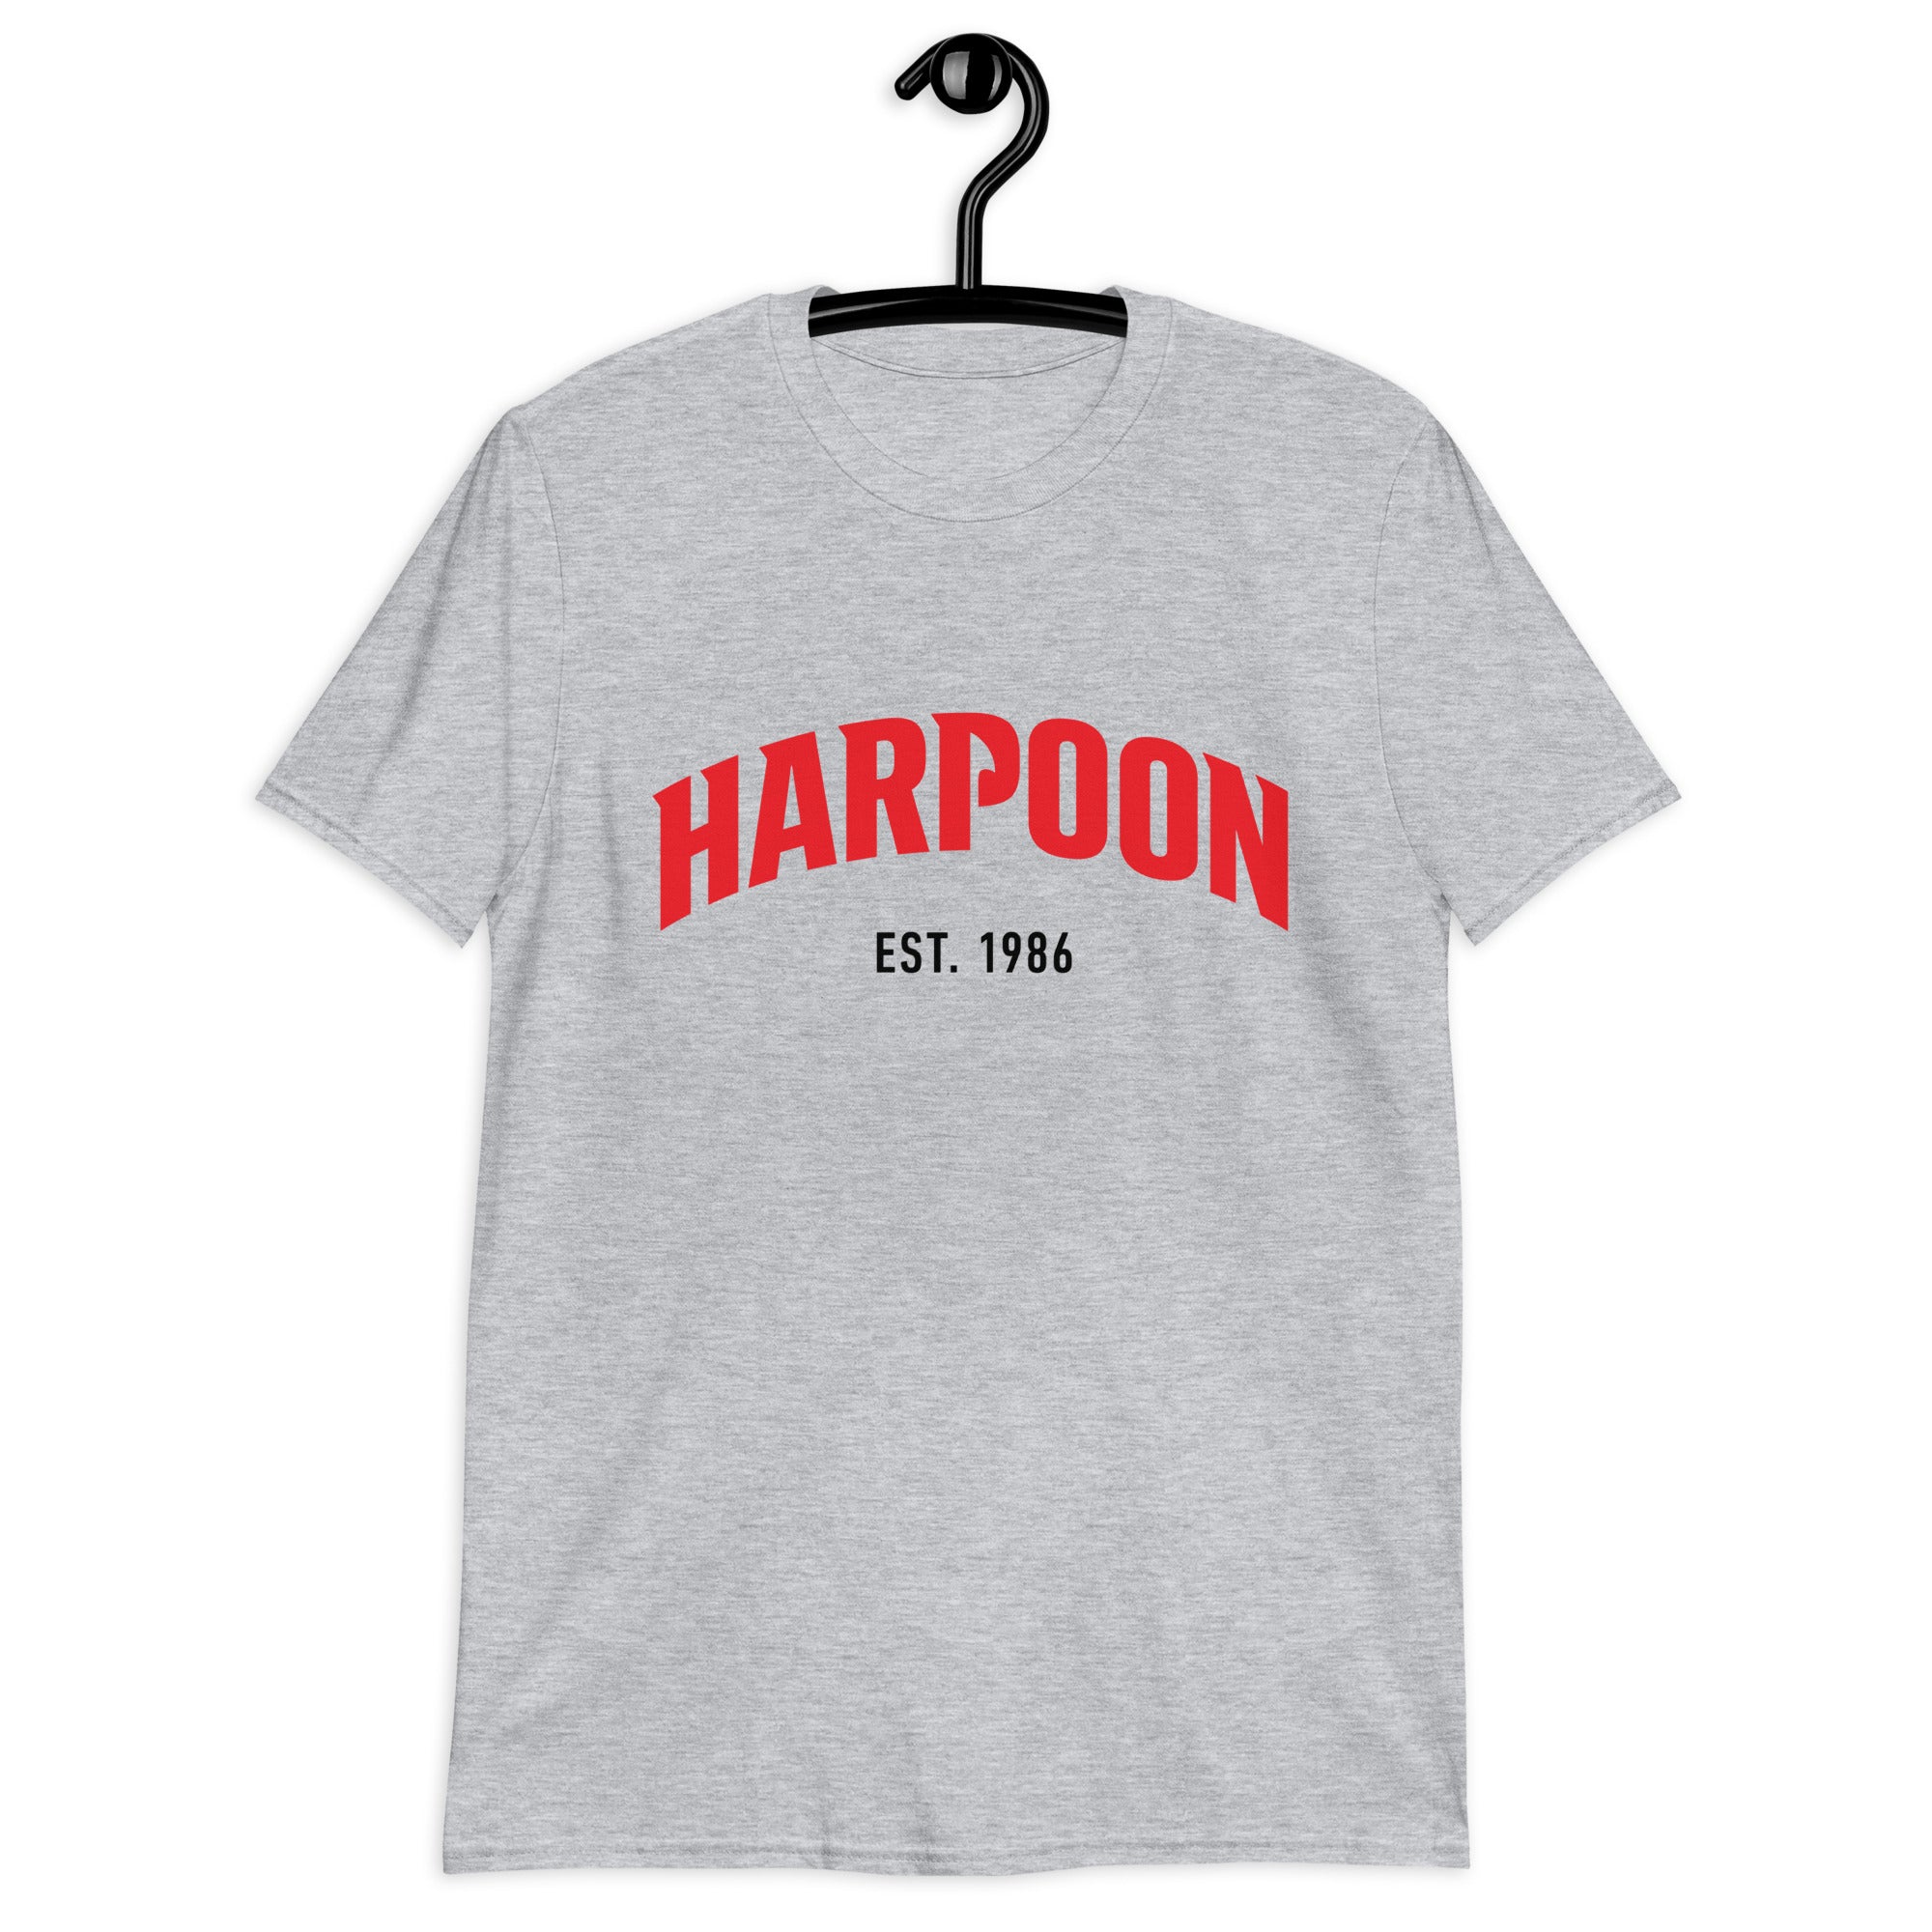 Harpoon Brewery T-Shirt